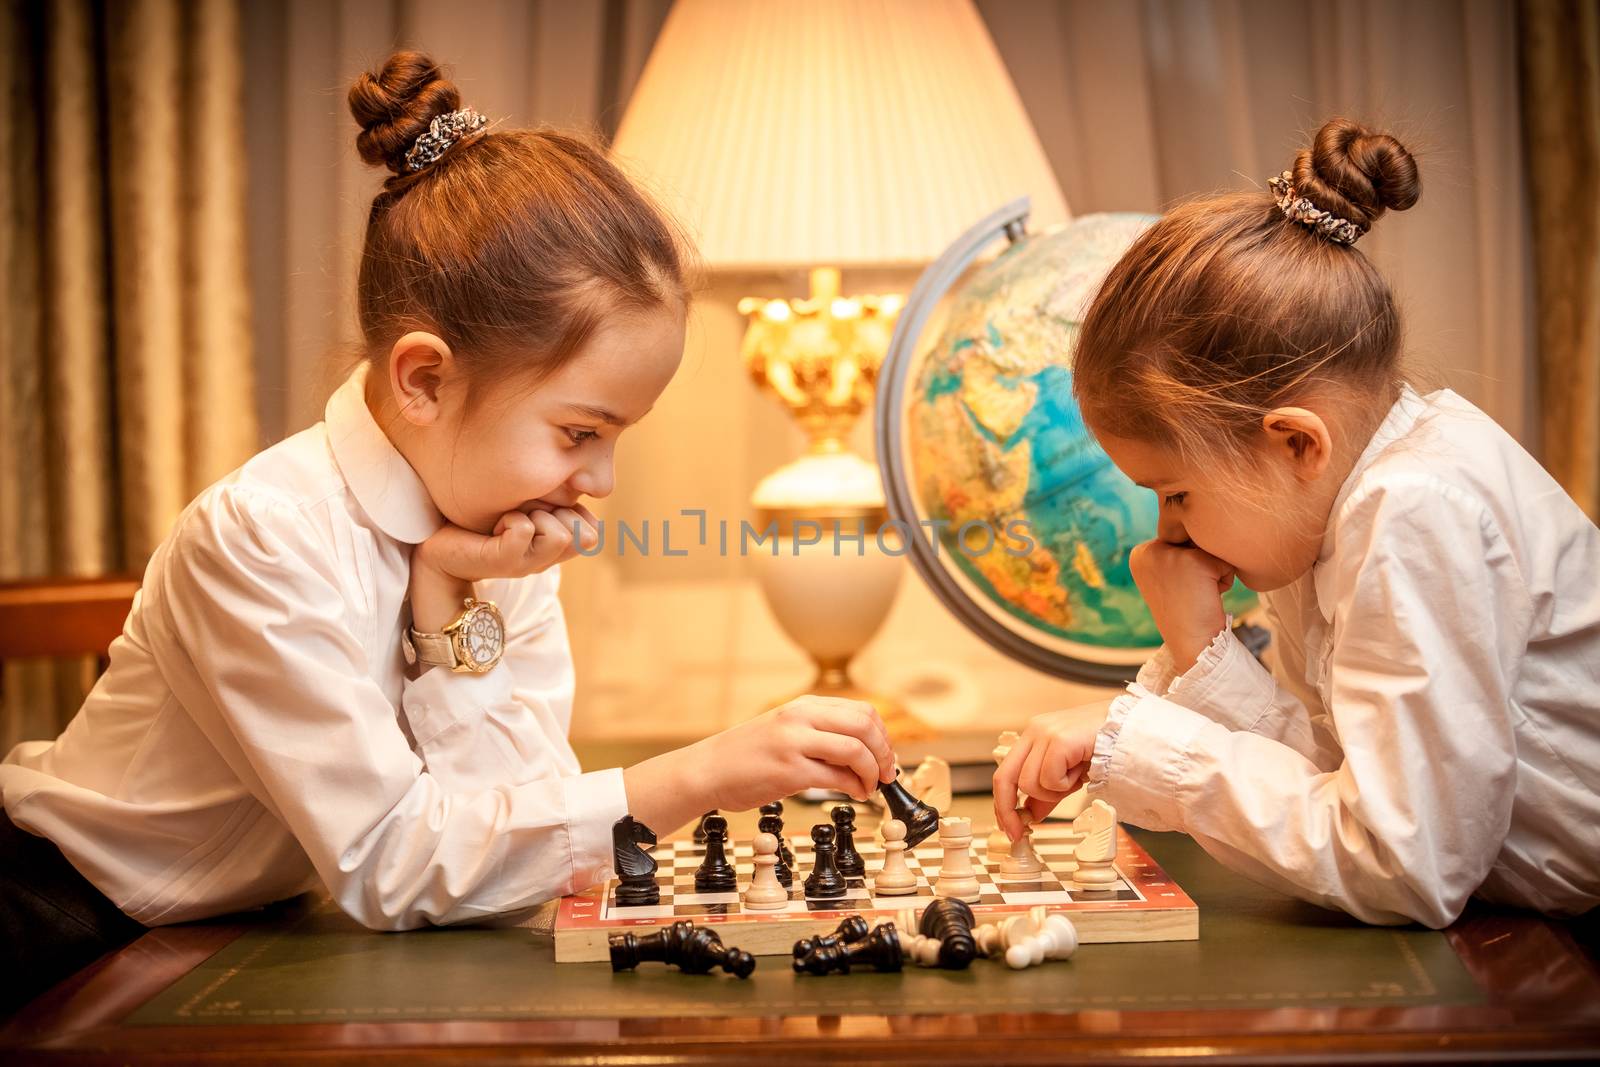 Girls in school uniform playing chess by Kryzhov